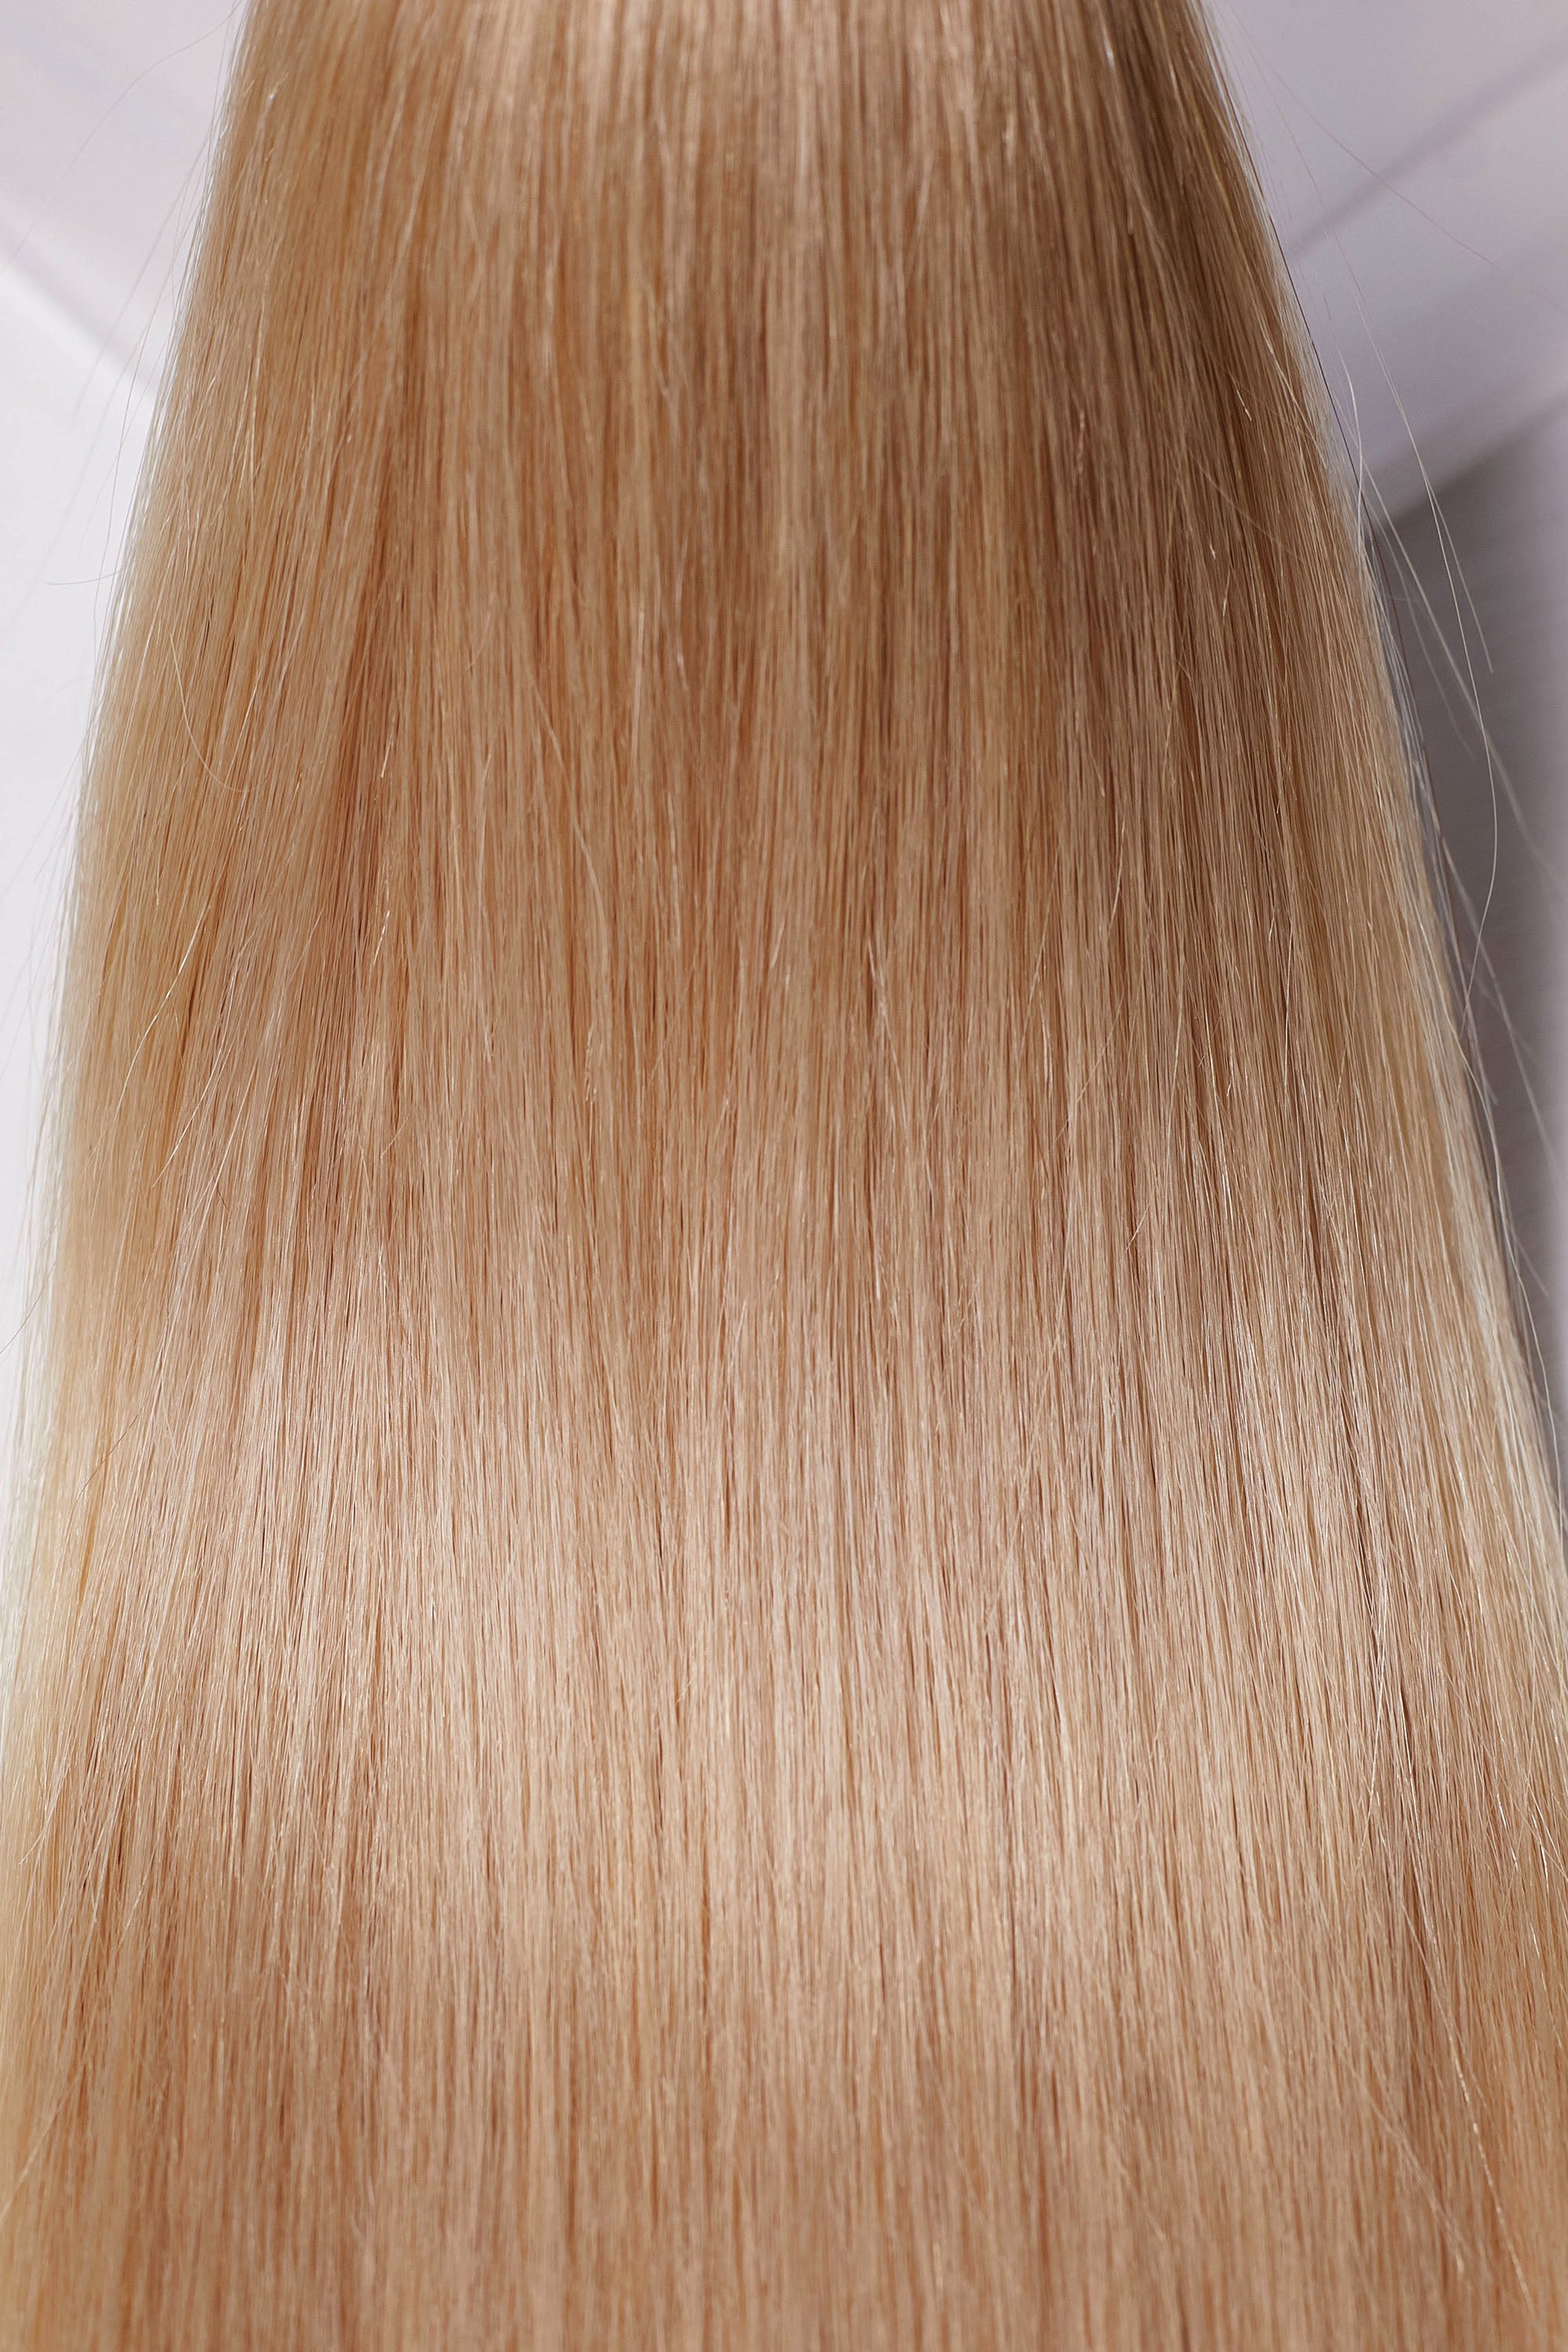 Behair professional Keratin Tip "Premium" 18" (45cm) Natural Straight Light Gold Sand #16 - 25g (1g each pcs) hair extensions